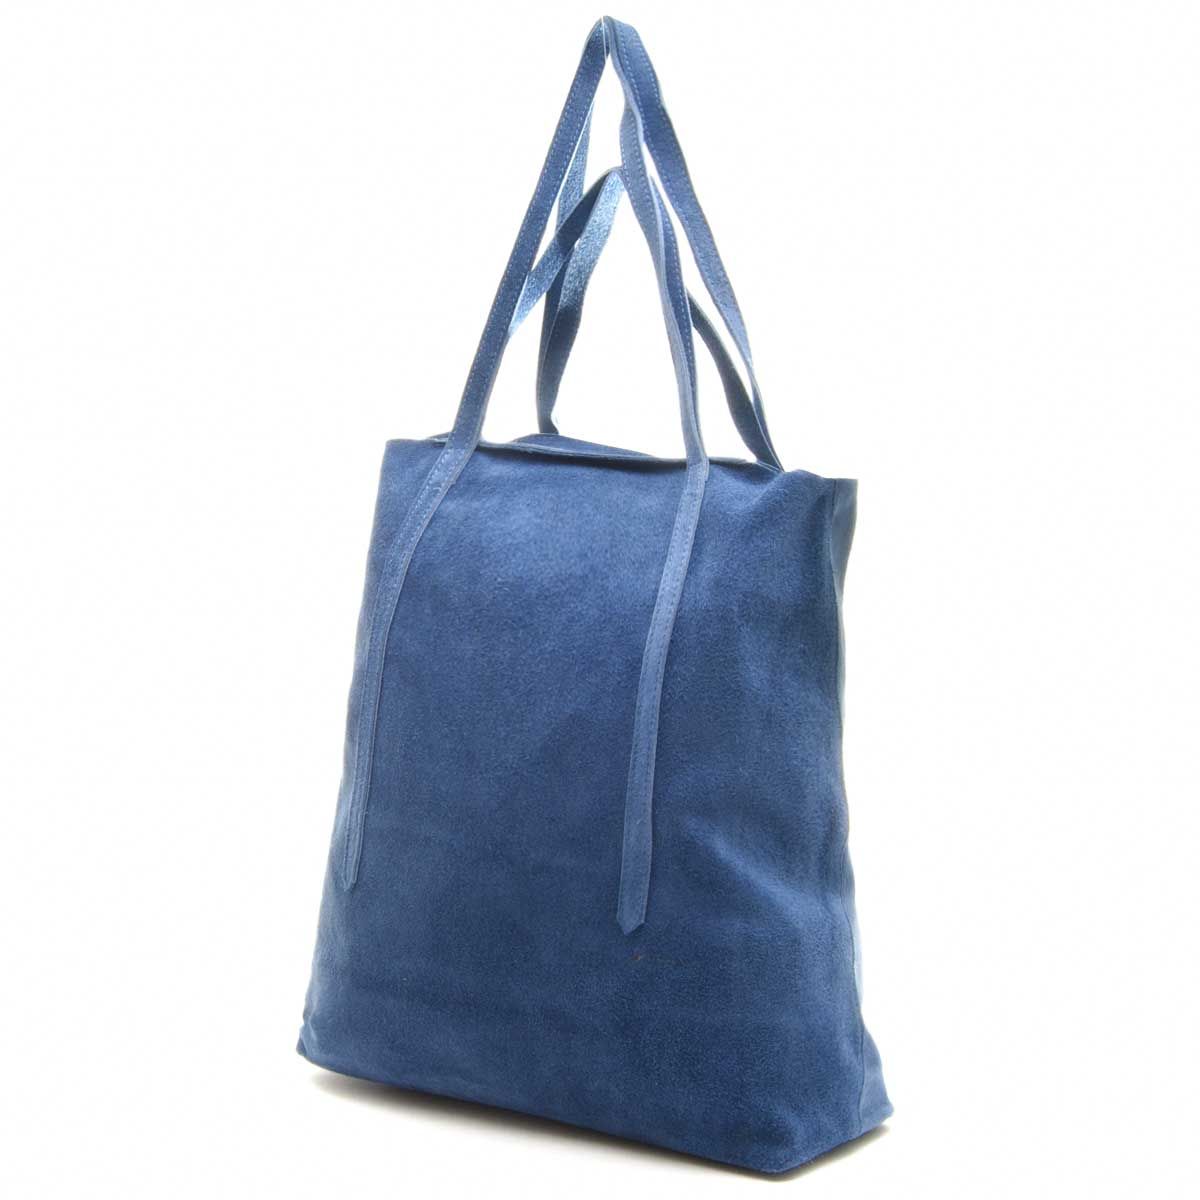 Purapiel Bag in Blue